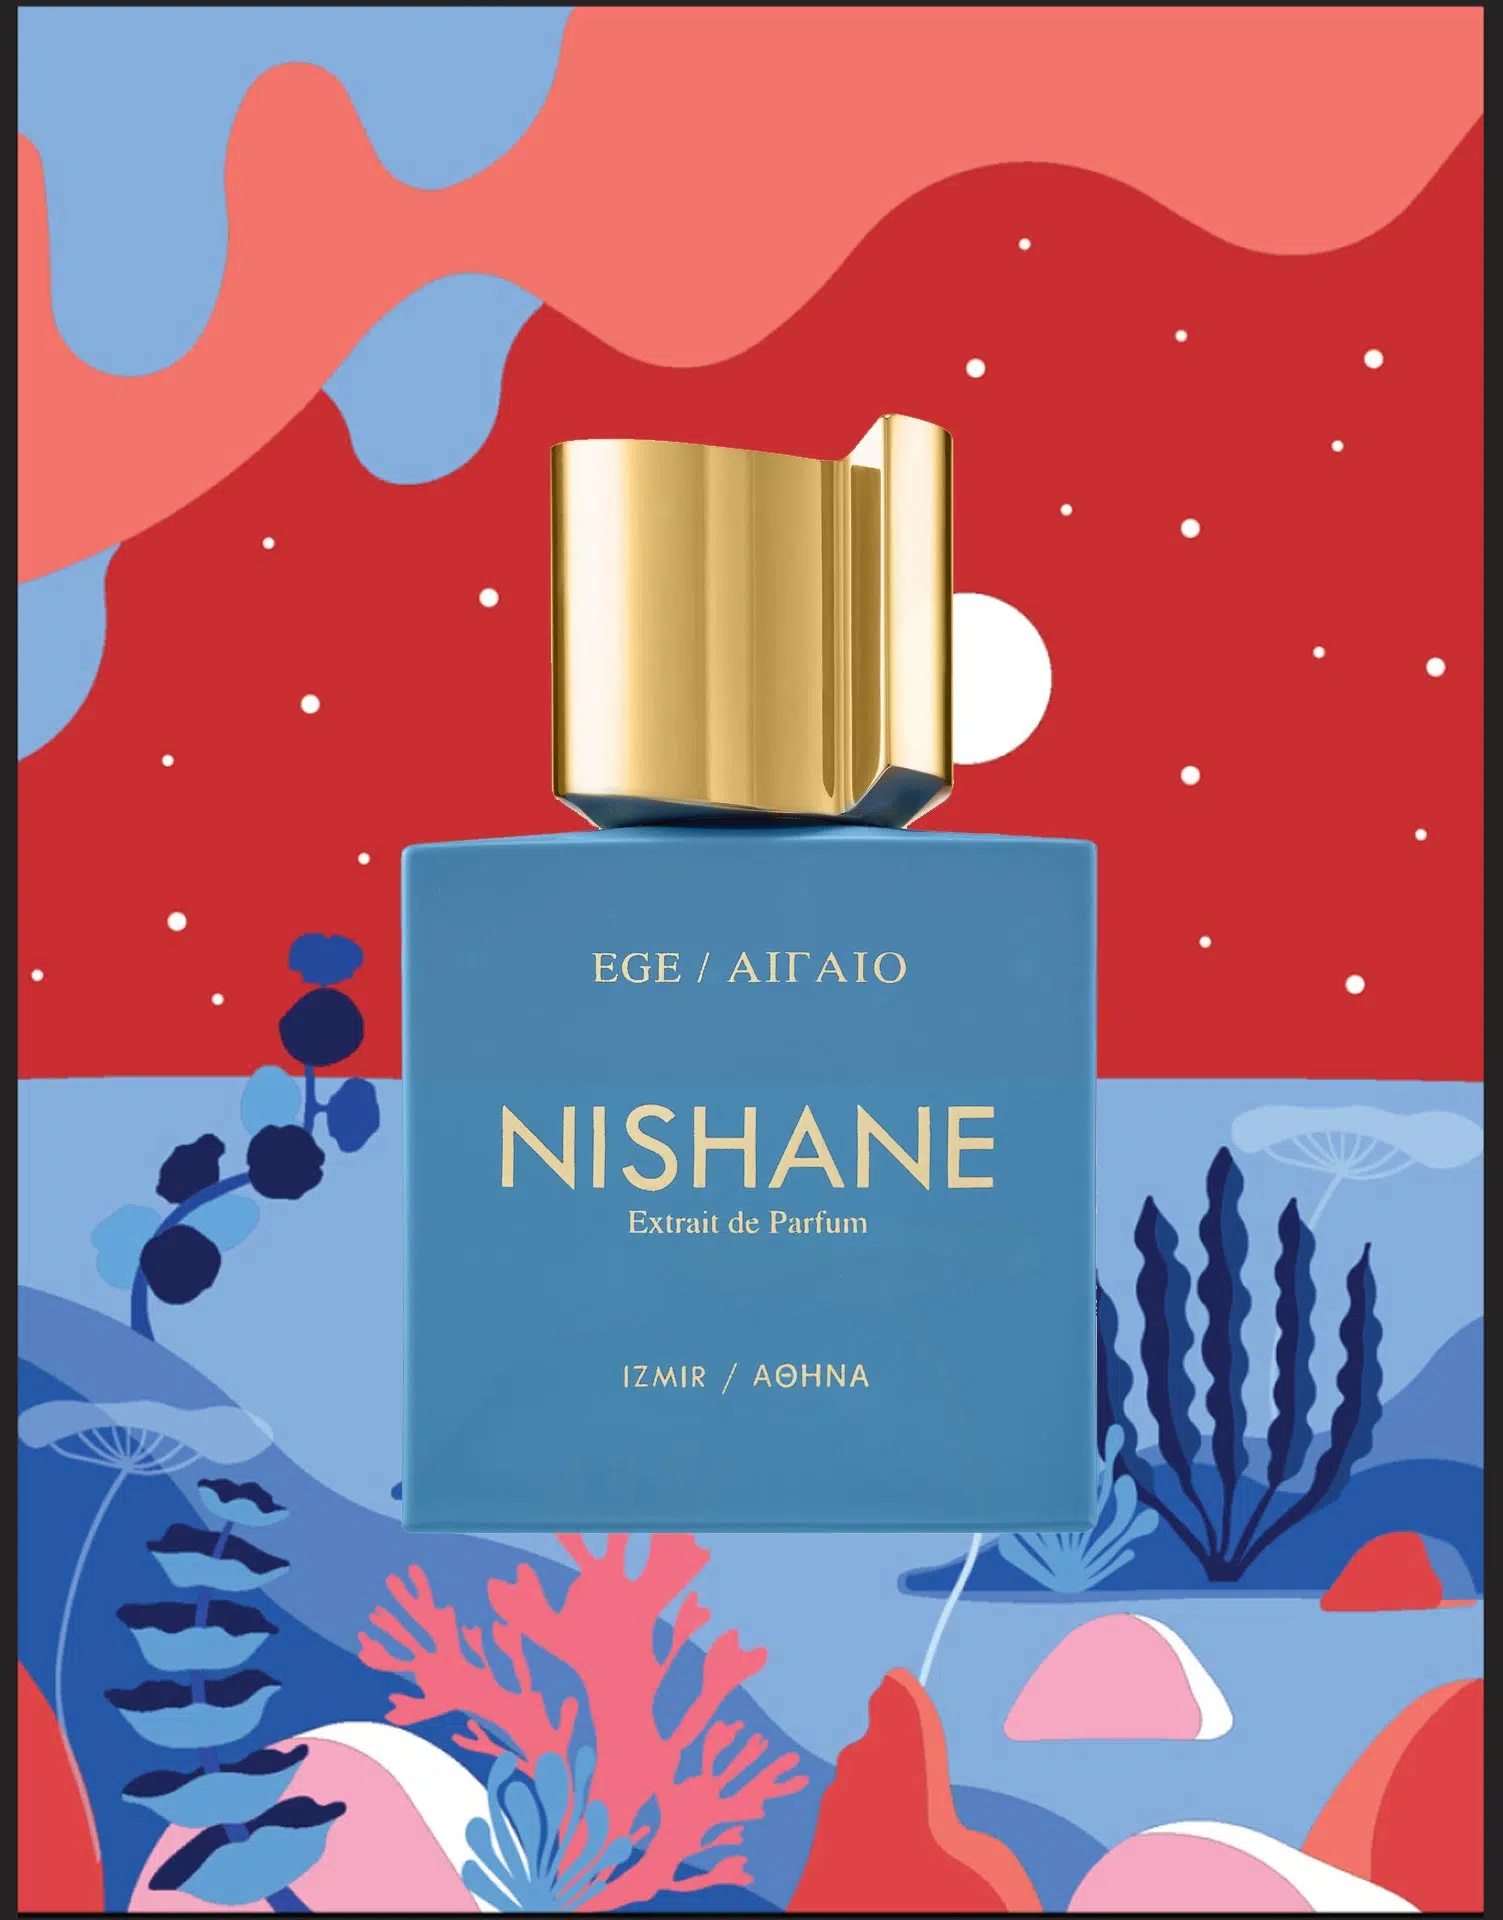 Ege Nishane Extrait de Parfum 50ml- Tuxedo.no - Nettbutikk - On Demand Barbers Oslo Norway